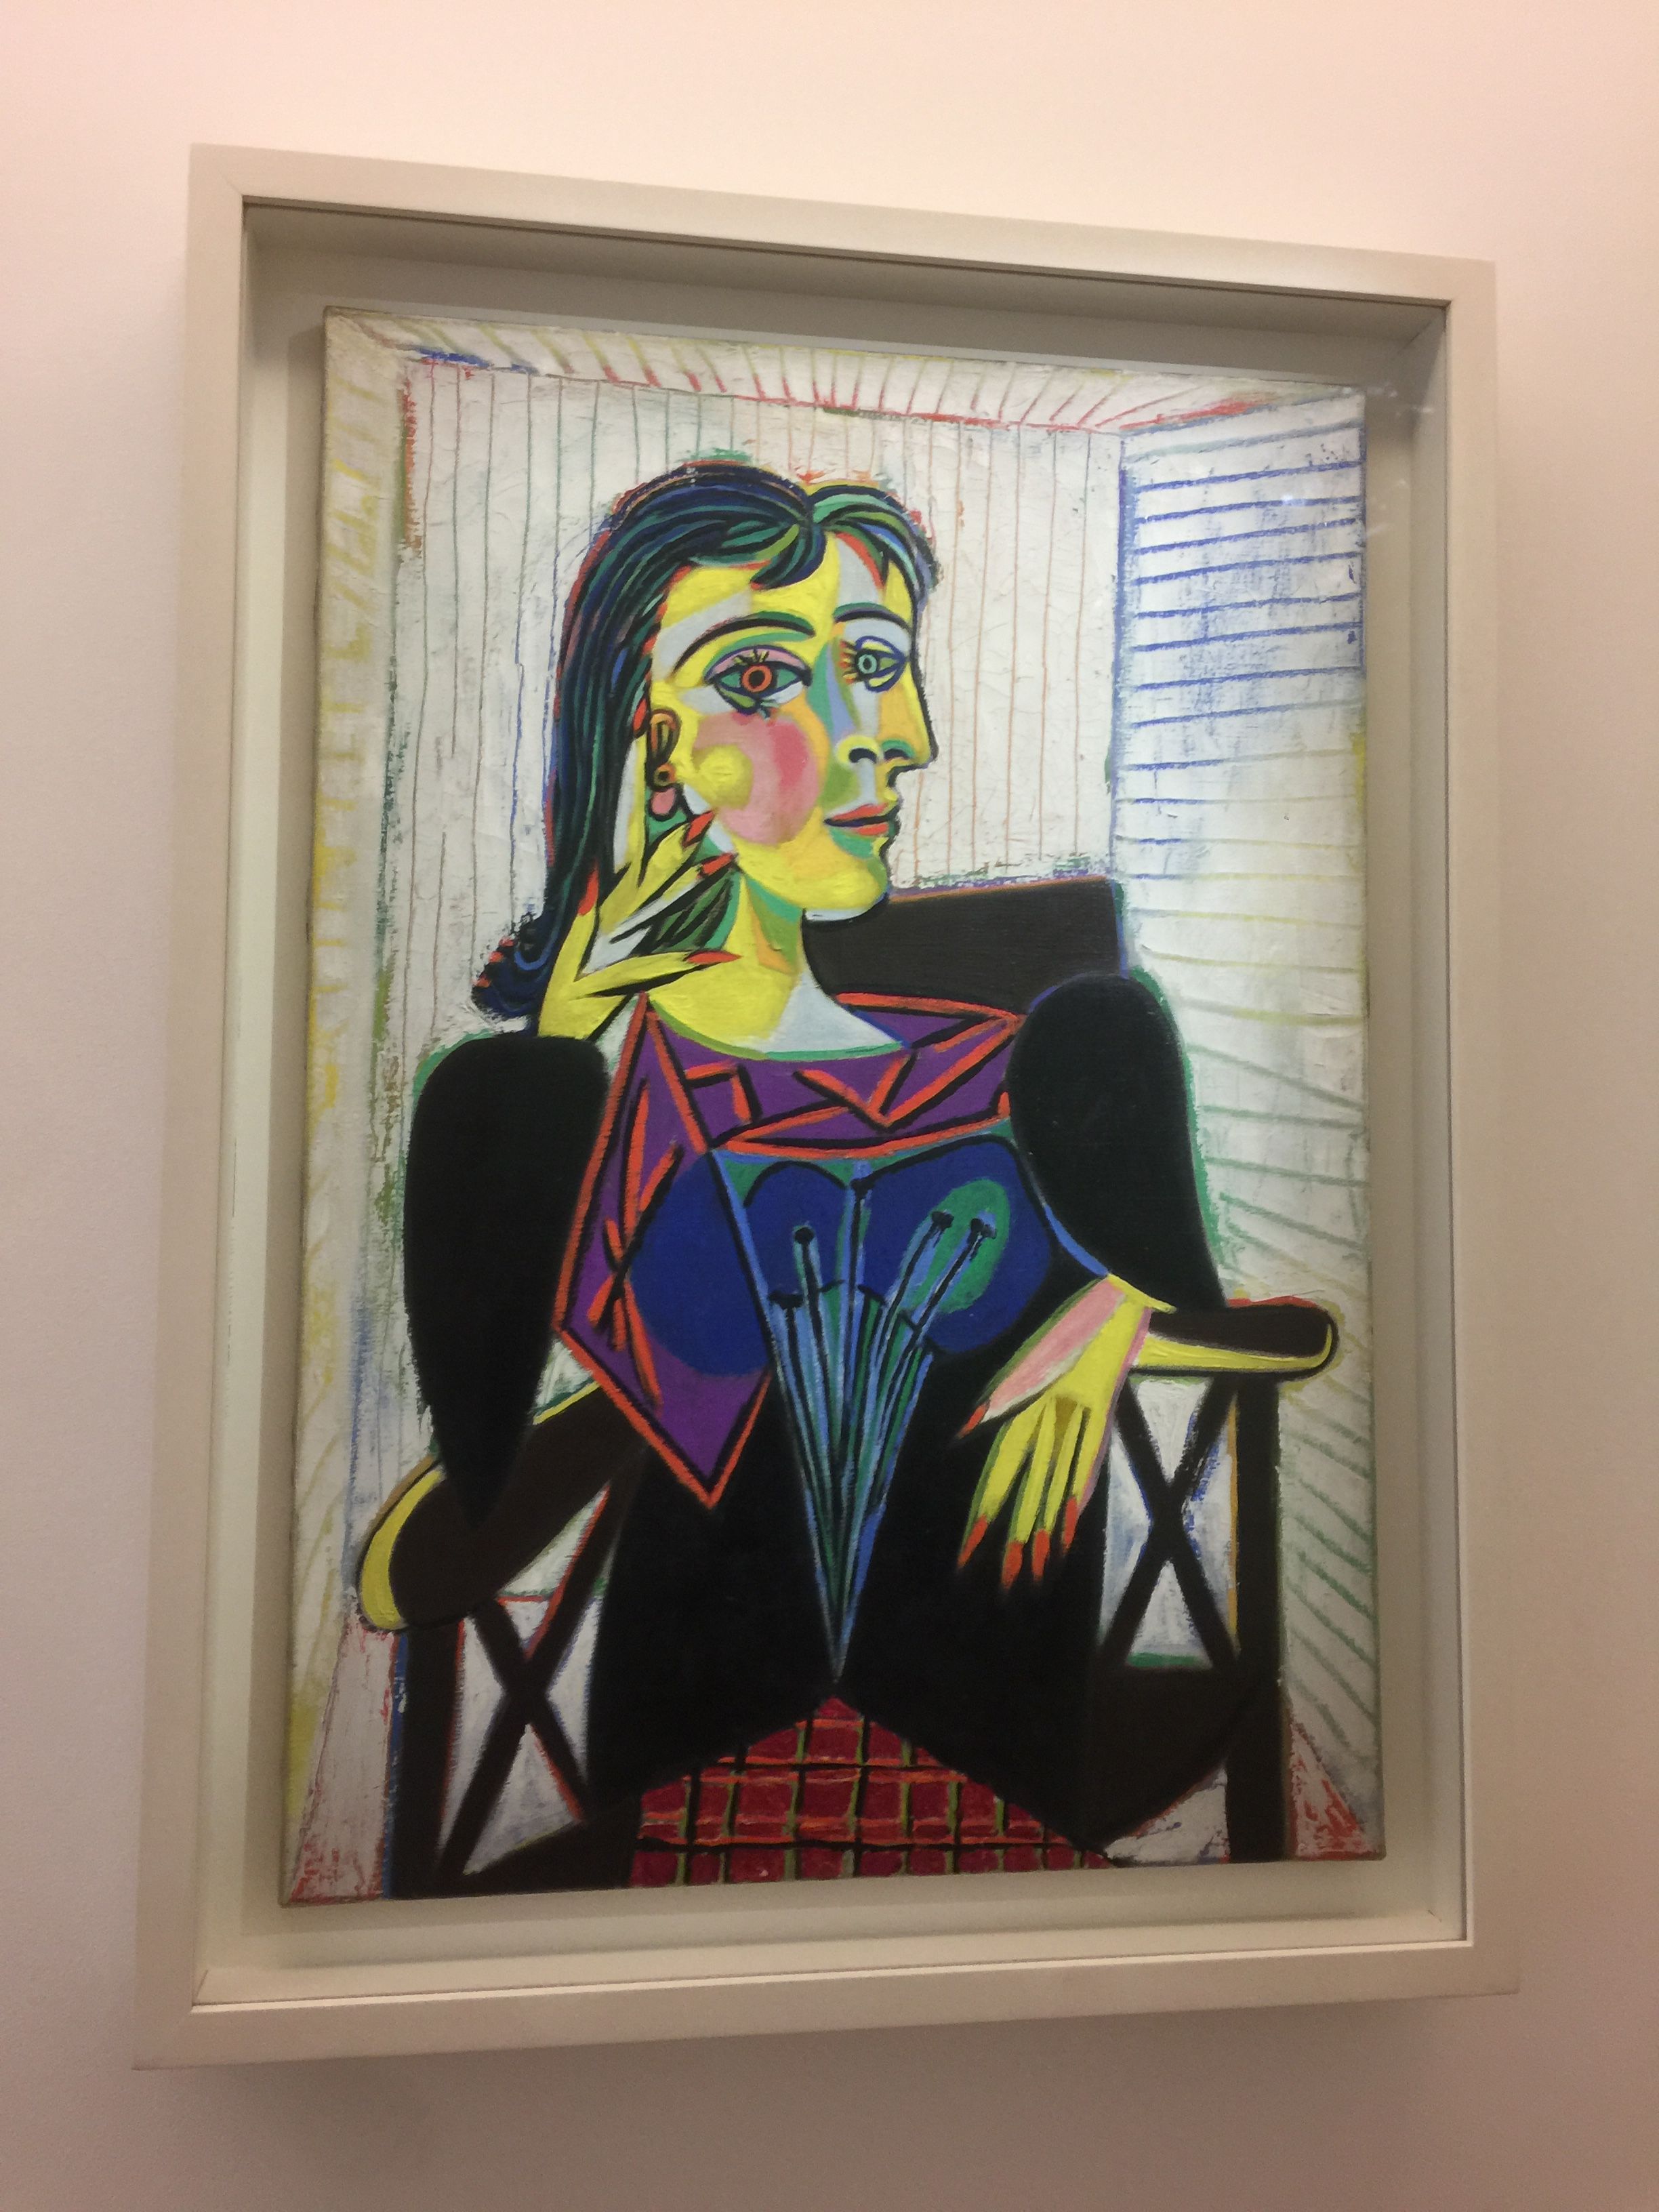 Picasso 1947. A major gift, Picasso Museum, Paris: 24 October 2017 - 28 January 2018